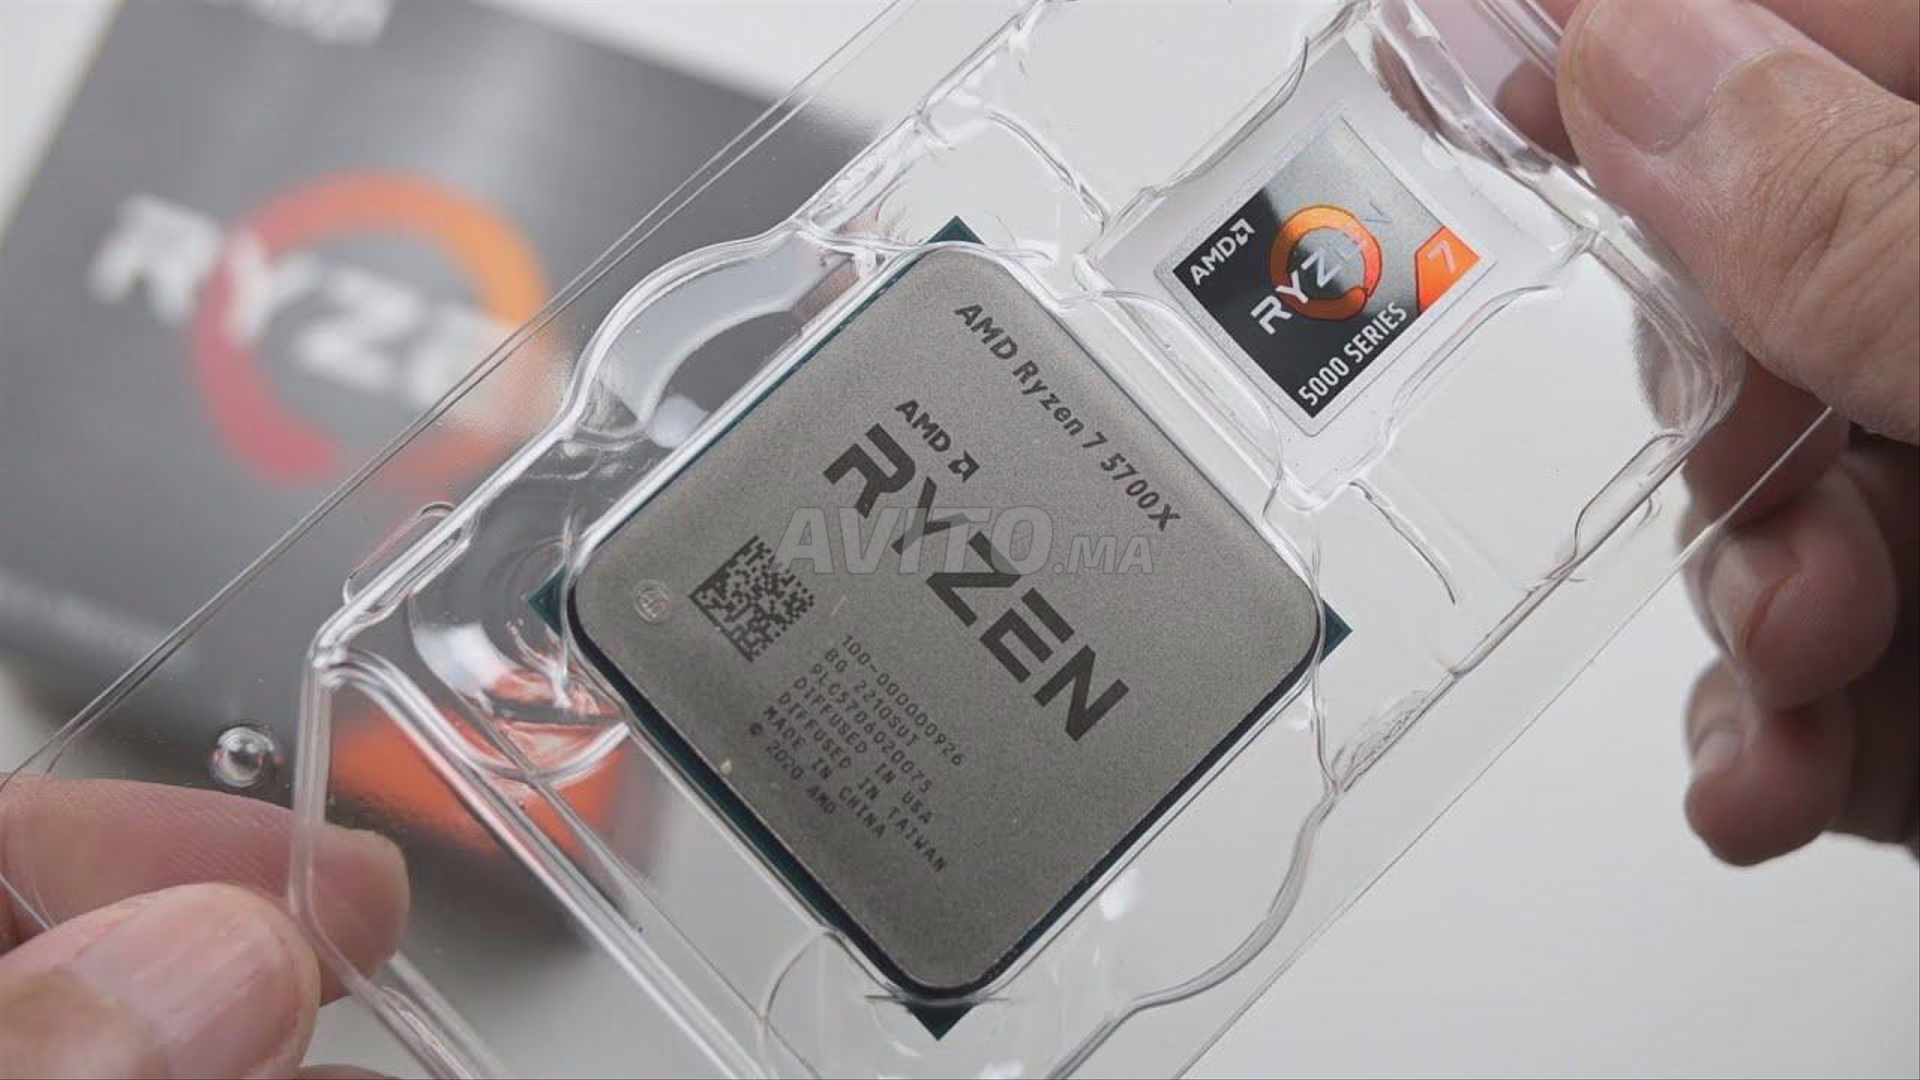 AMD Ryzen 9 7950X (4.5 GHz / 5.7 GHz) Processeurs AMD Maroc